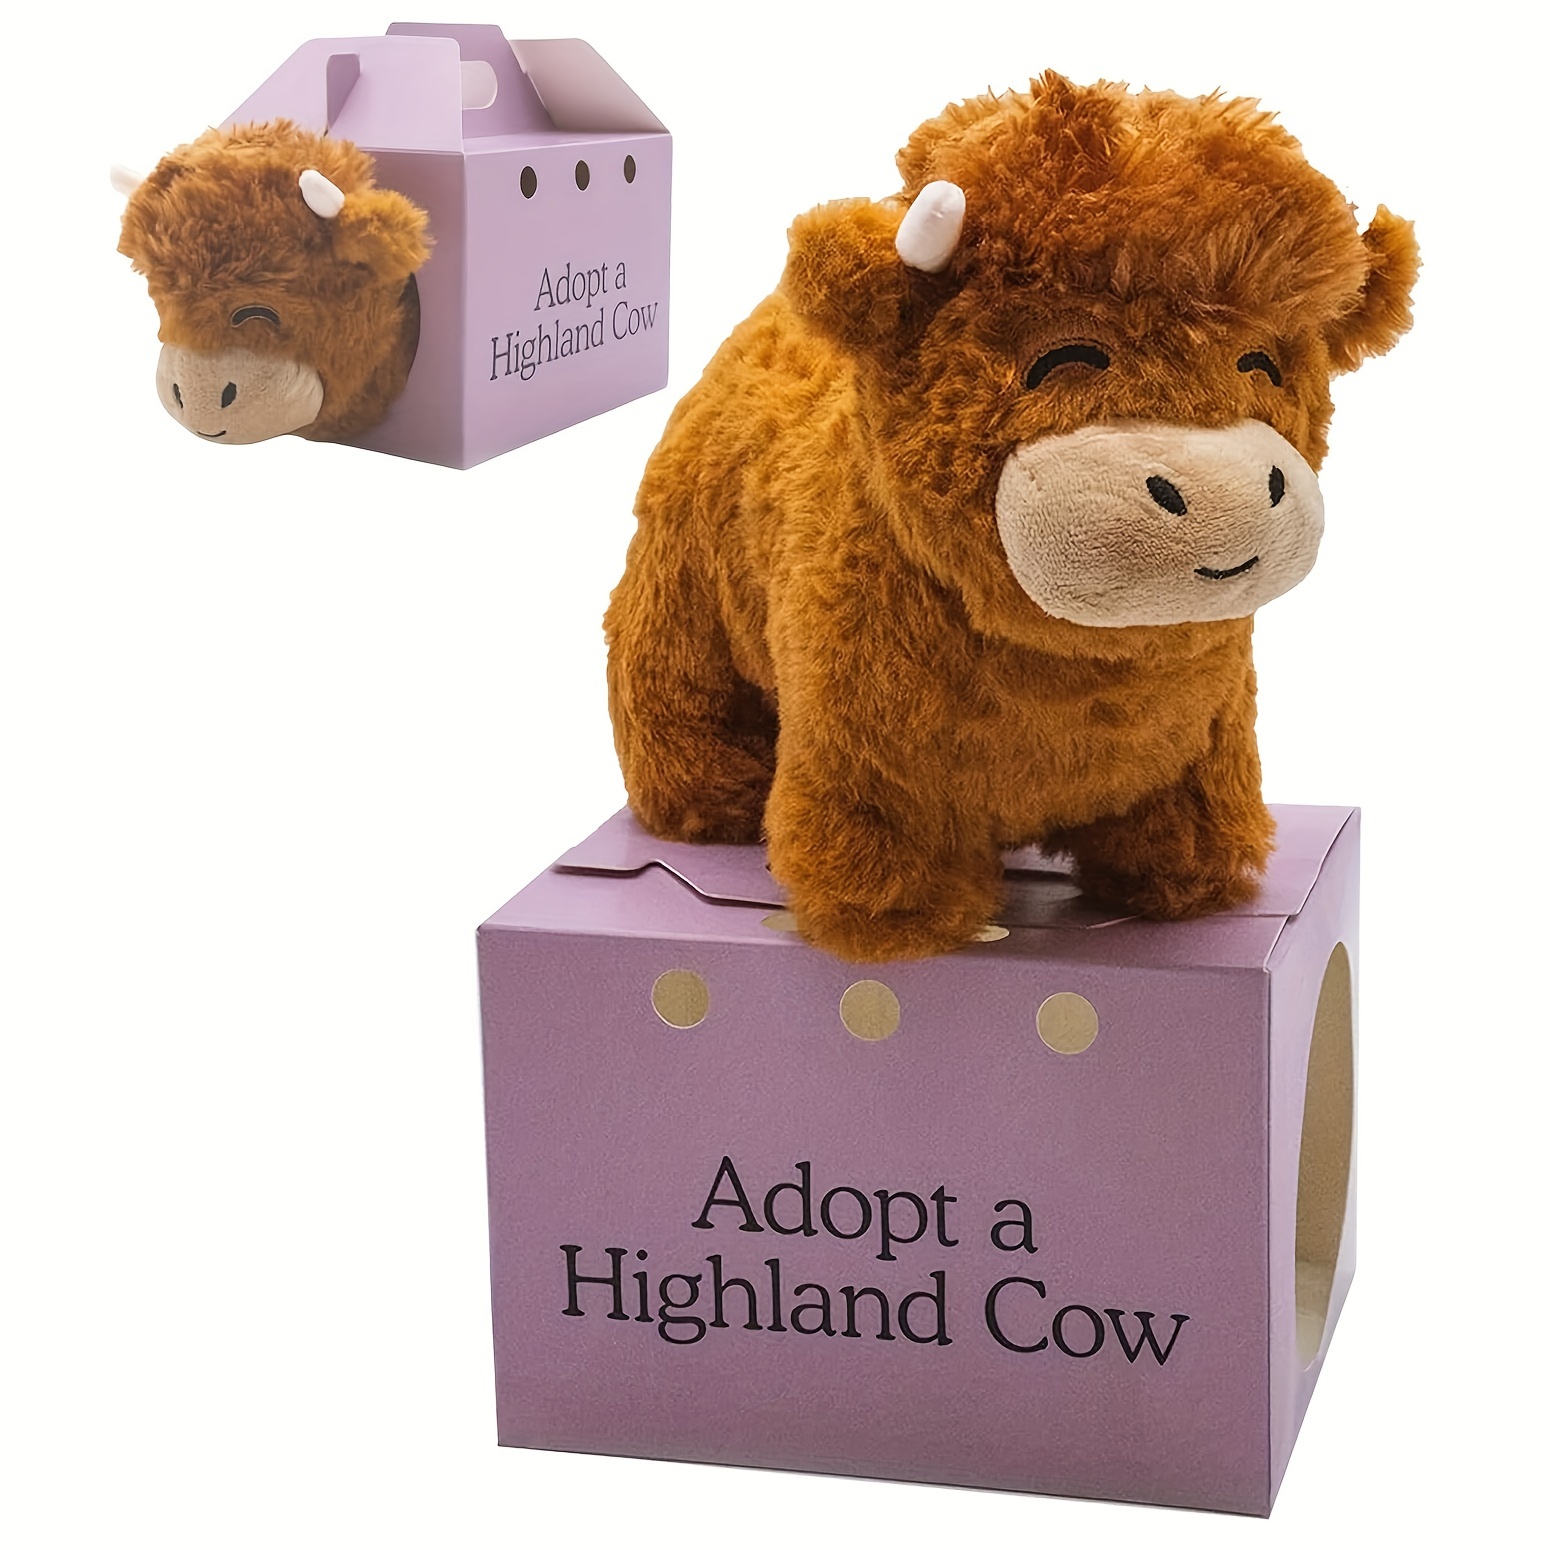 Juguete de peluche de vaca bonita de dibujos animados, juguete de peluche  de ganado de animales suaves, mu?eco de toro Kawaii, regalos de cumplea?os